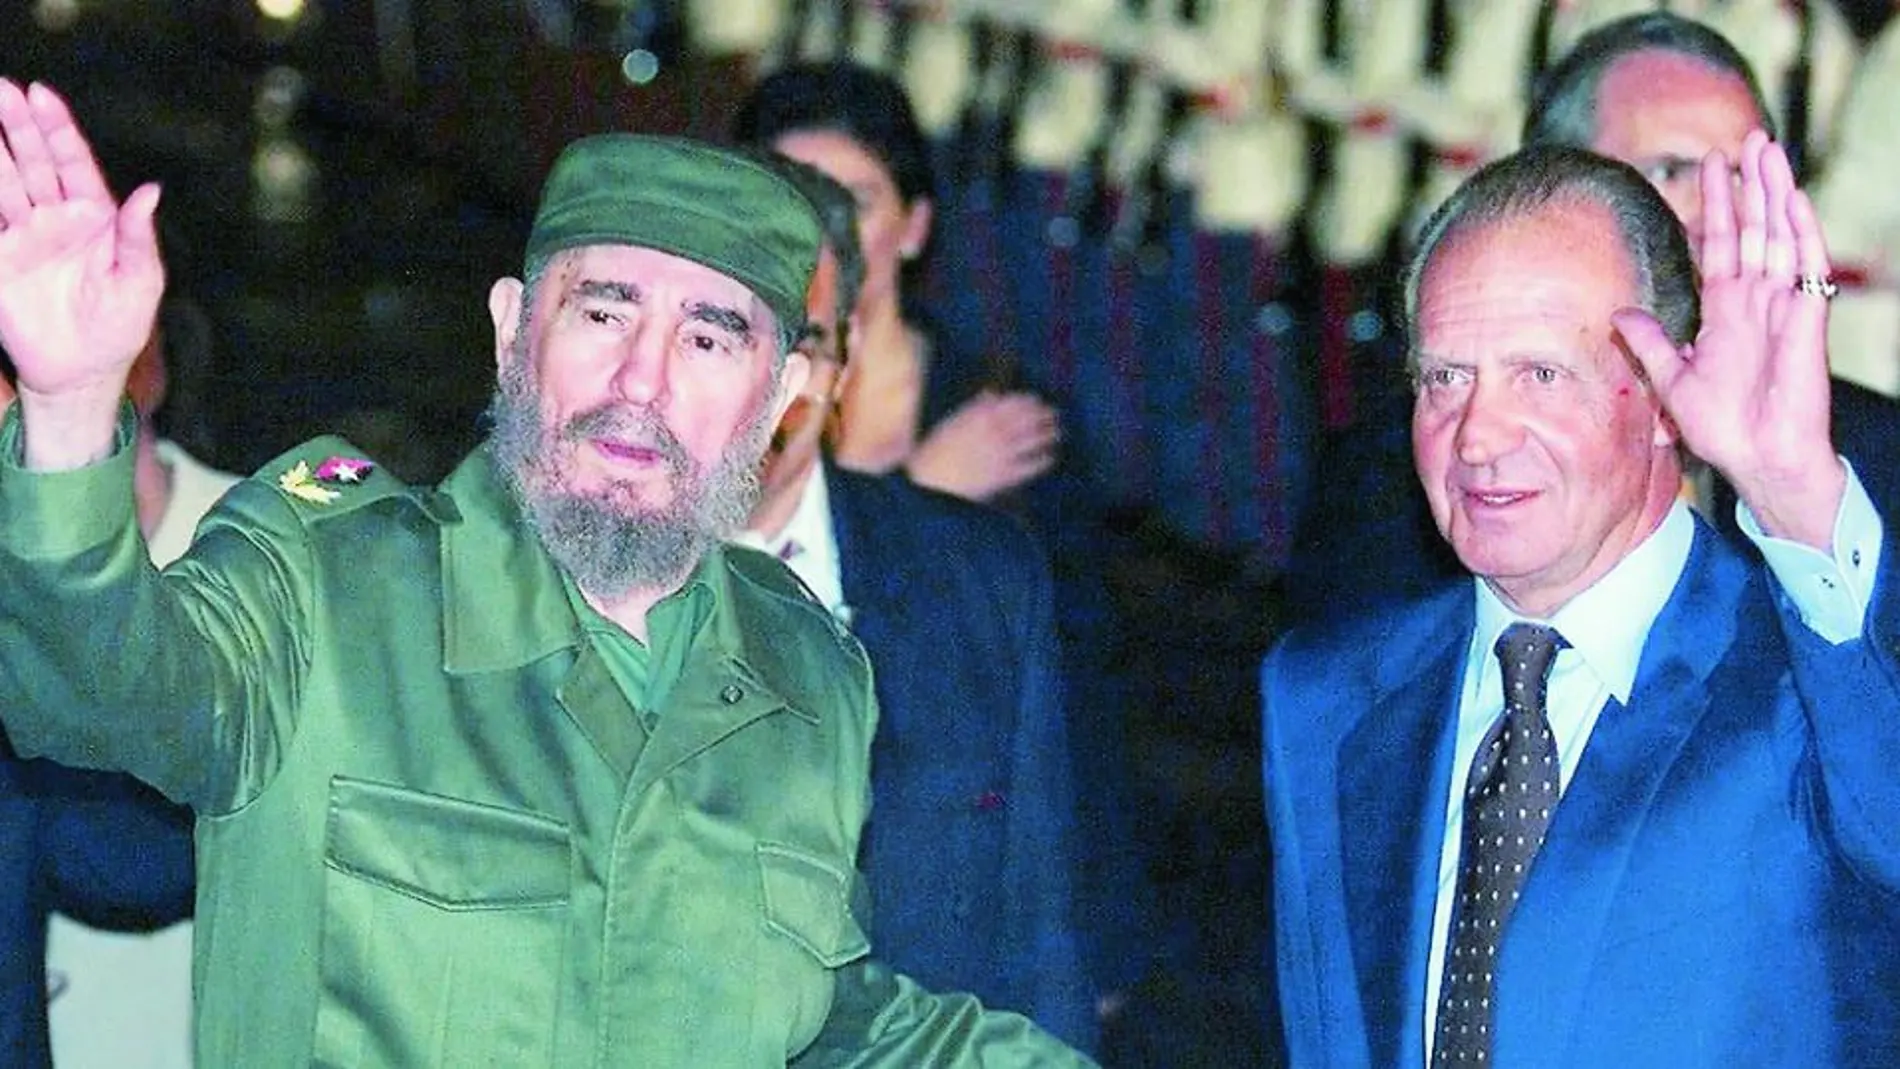 El Rey Juan Carlos I y el entonces gobernante cubano Fidel Castro durante la IX Cumbre Iberoamericana